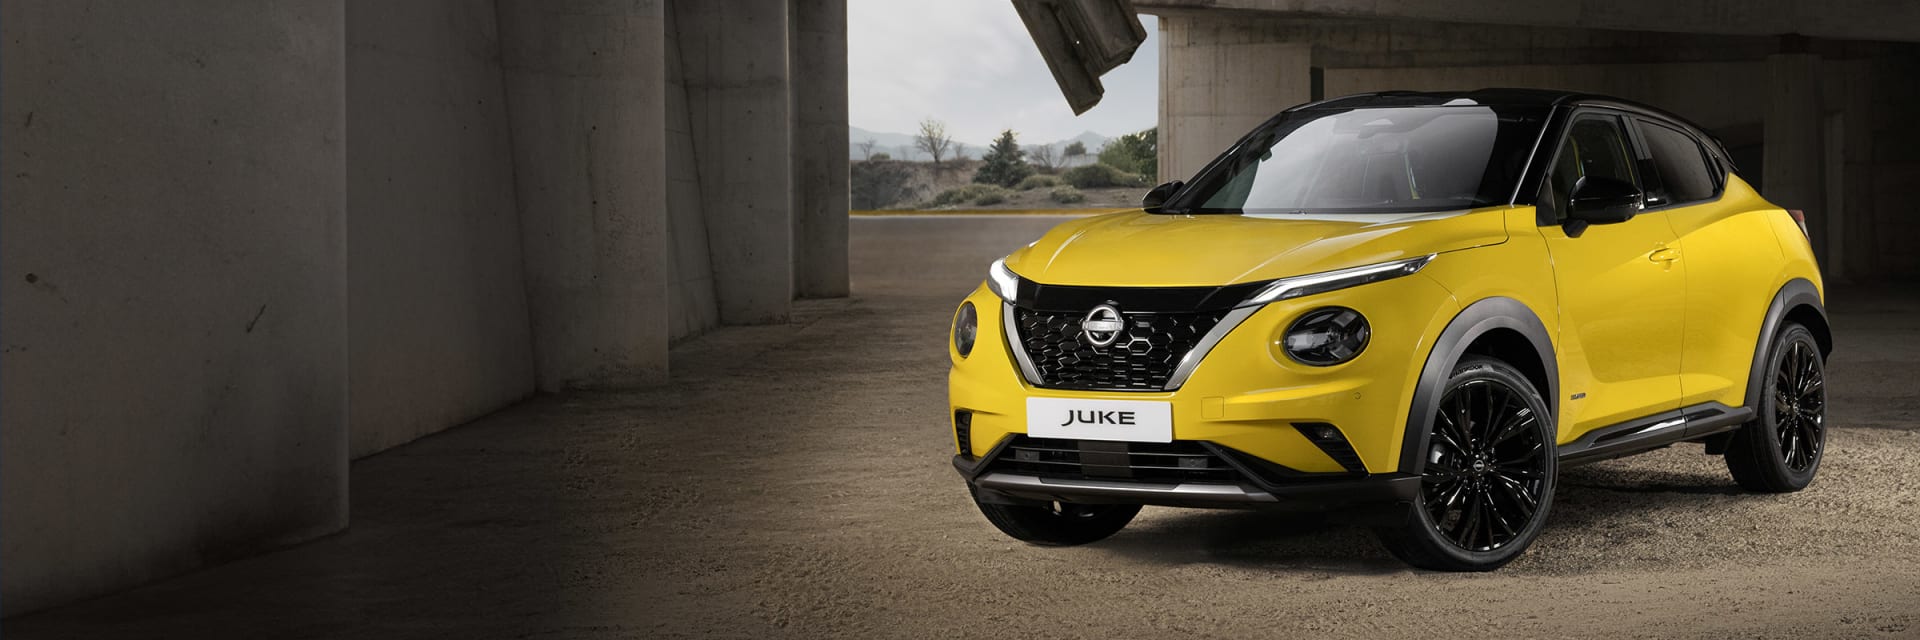 Nissan Juke: Say hello to yellow again